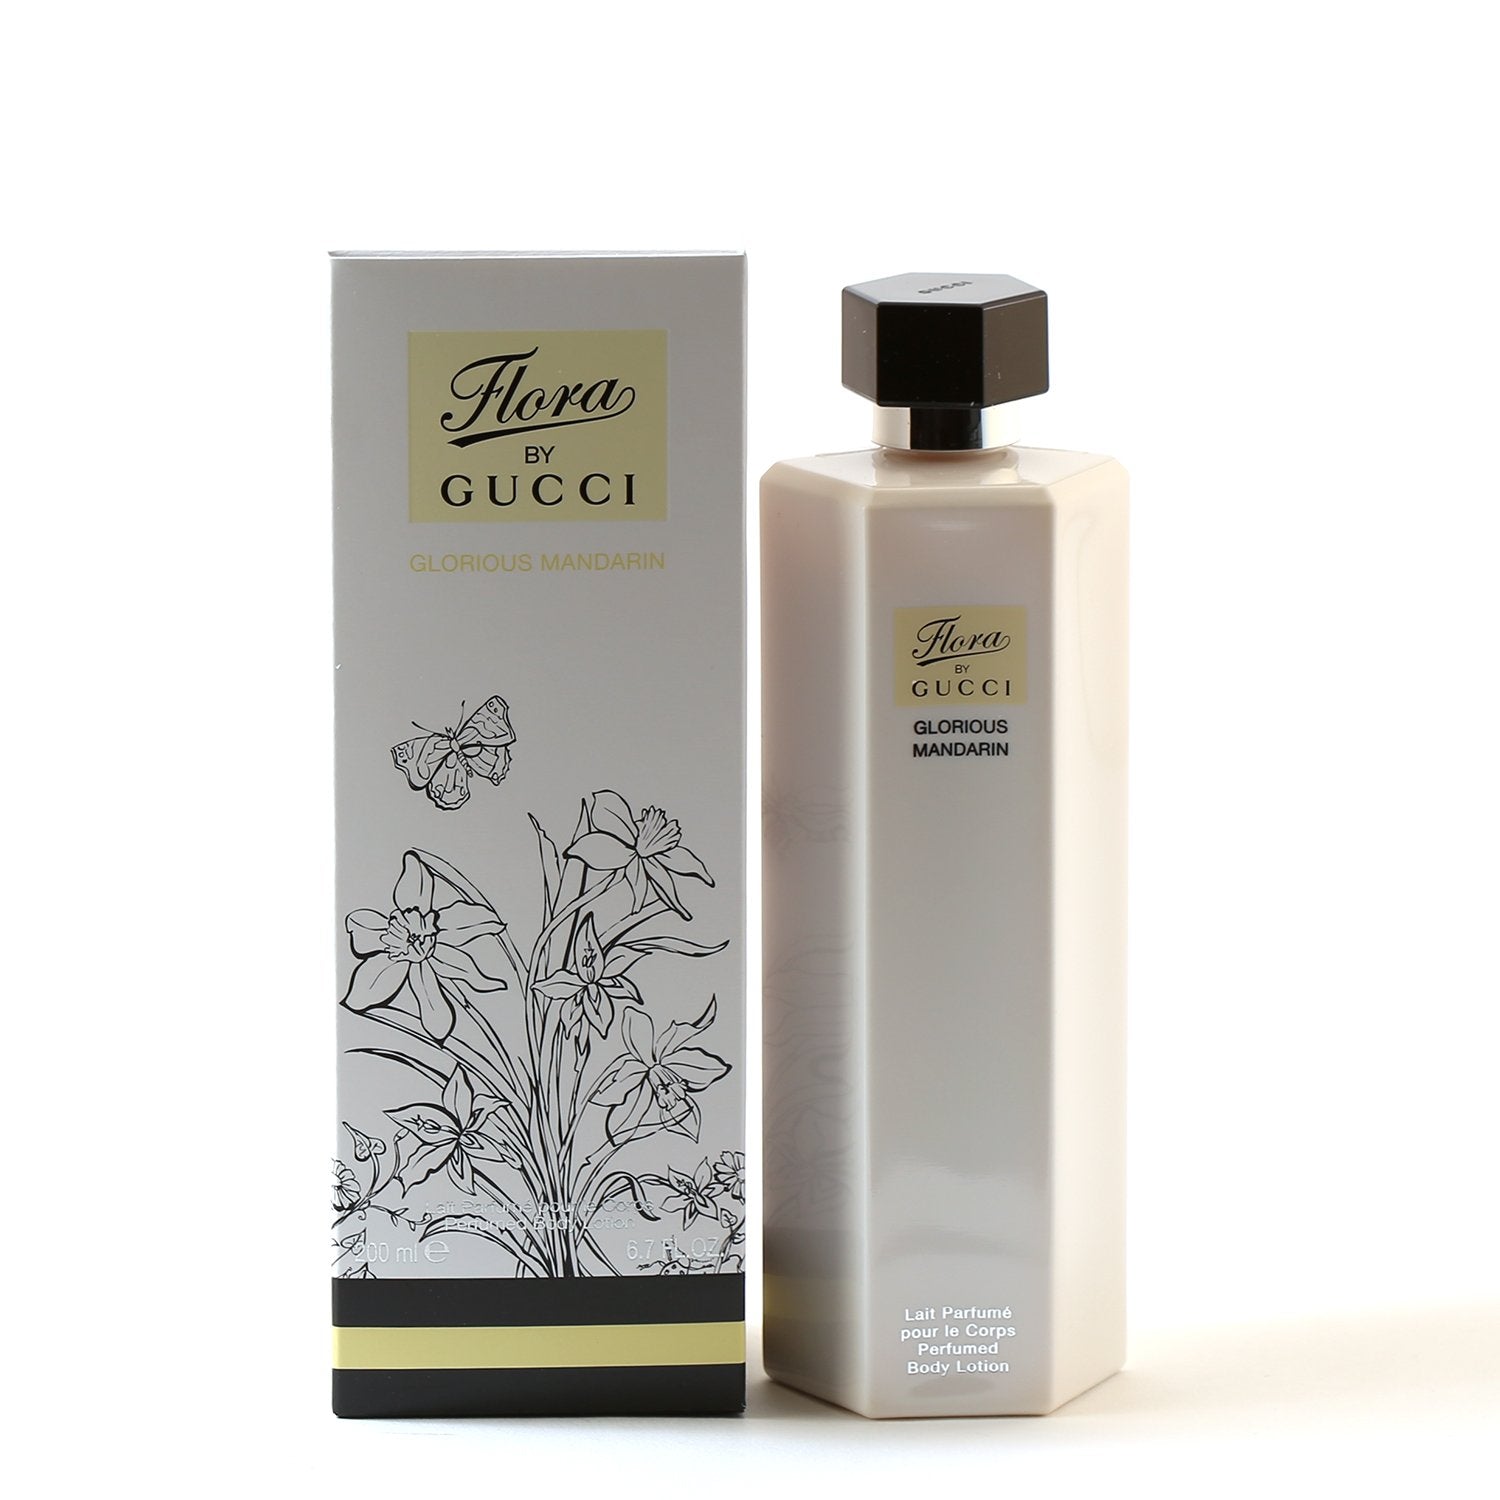 Perfume - GUCCI FLORA MANDARIN FOR WOMEN - BODY LOTION, 6.7 OZ